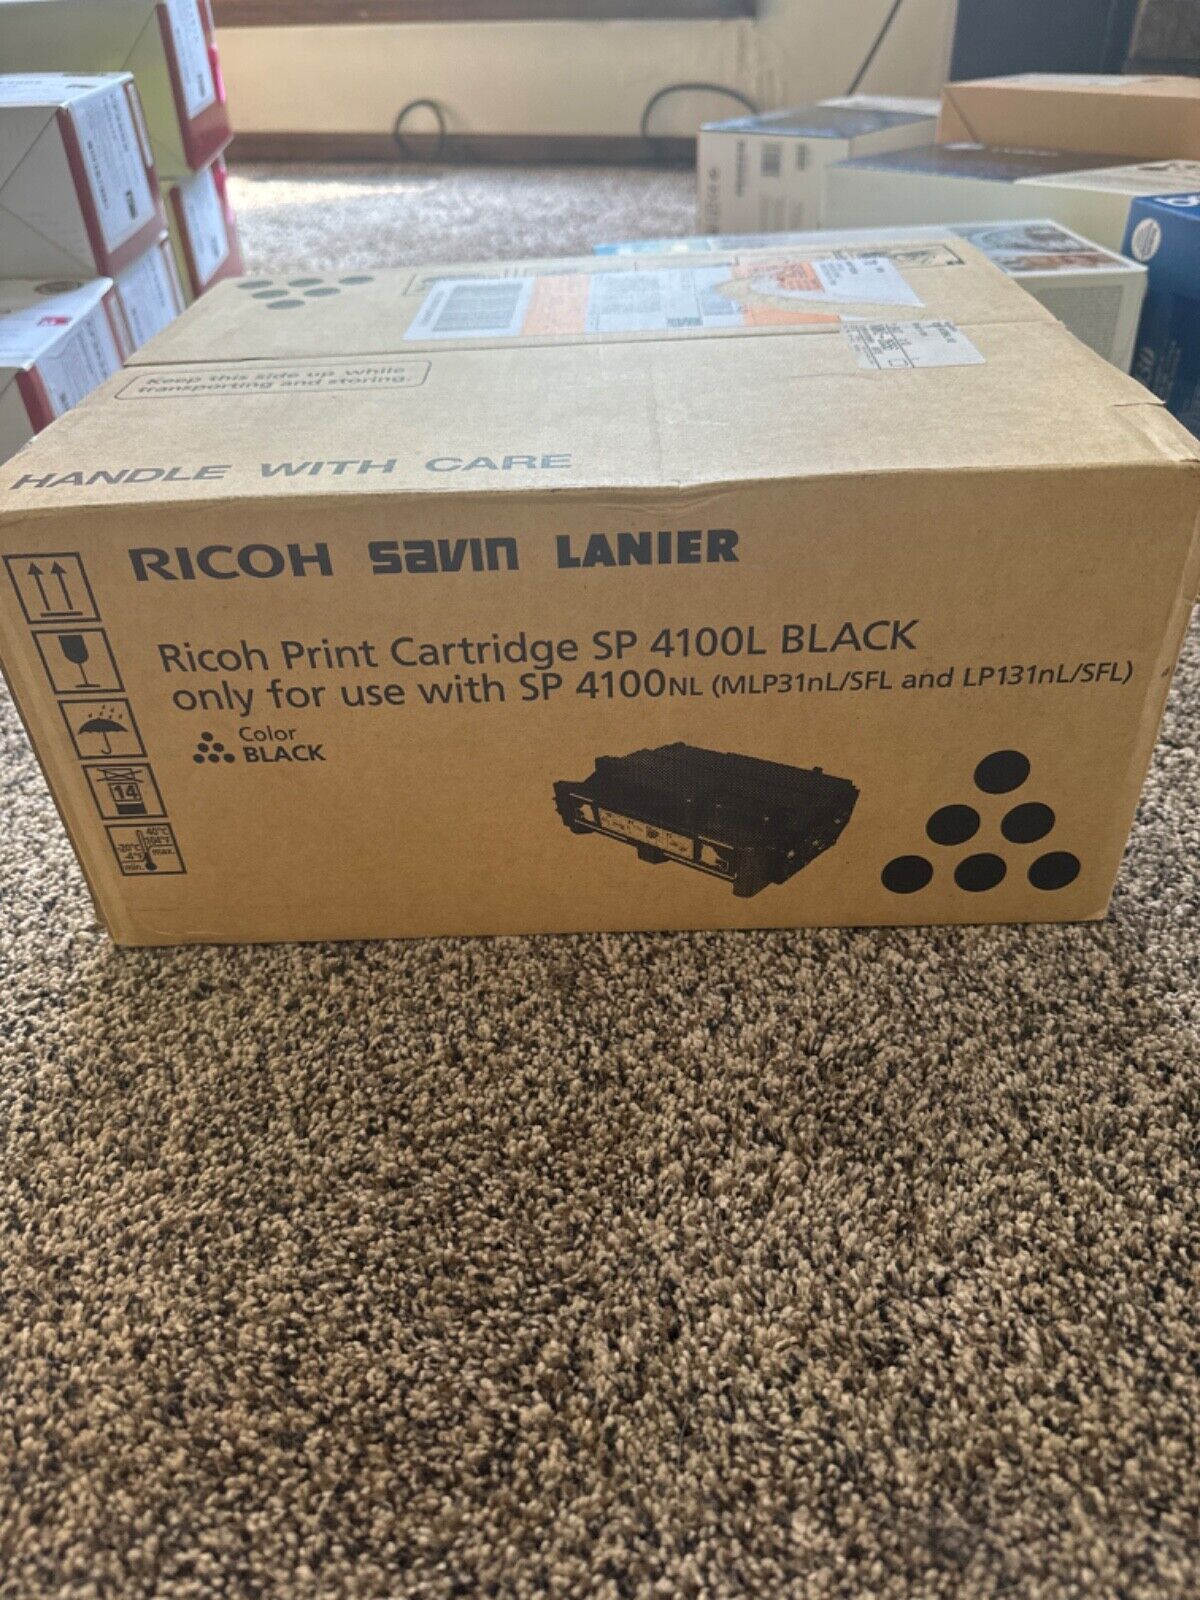 NEW OPEN BOX/ RICOH PRINT CARTRIDGE SP 4100L BLACK (M889-33)